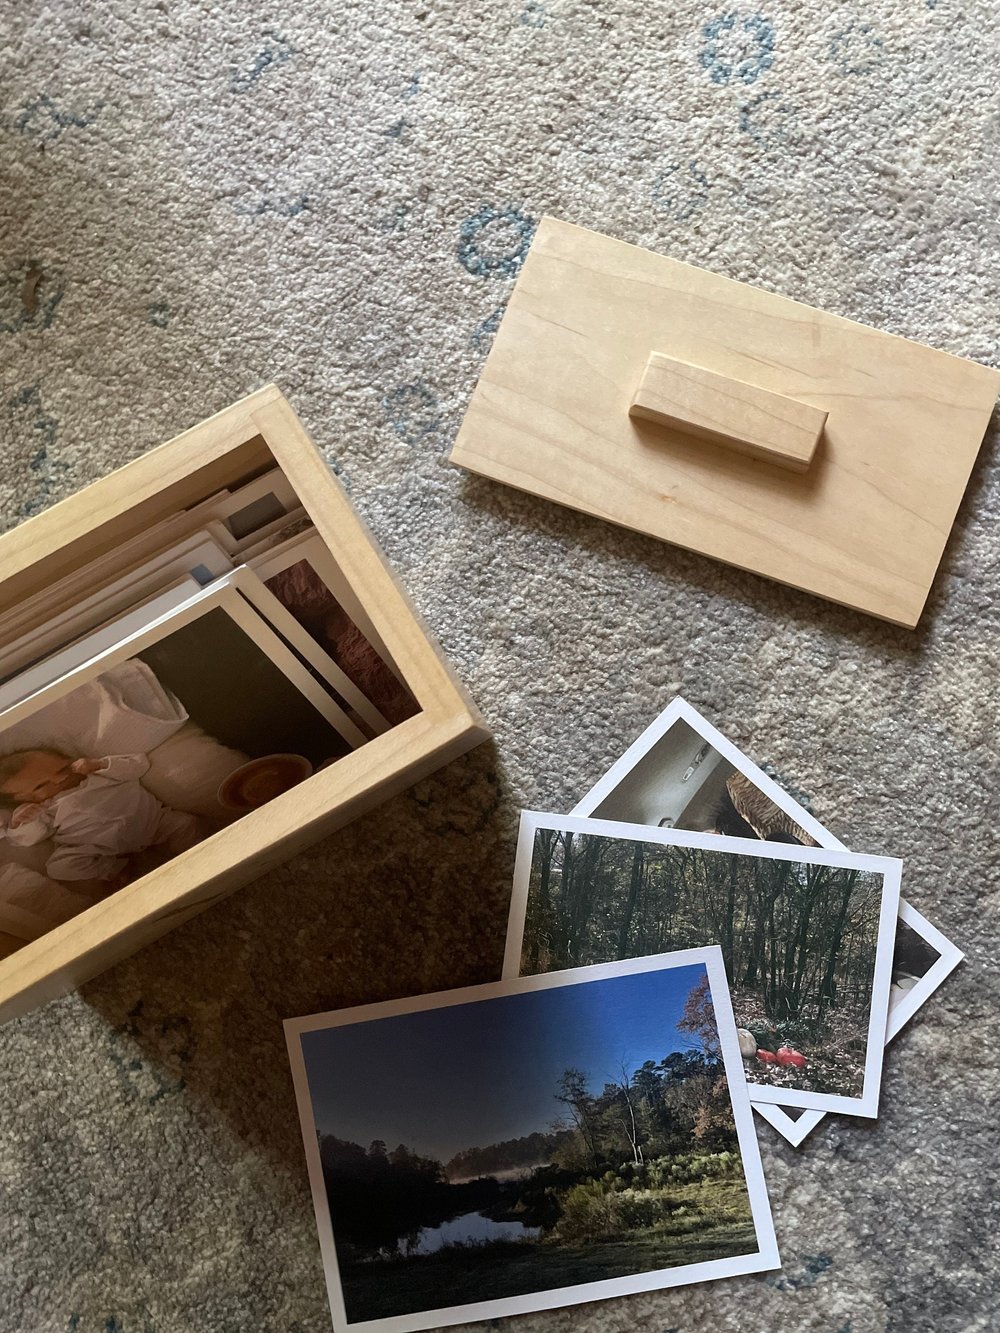 5x7 Photo Memory Box in Maple Wood Wedding Prints or Keepsake